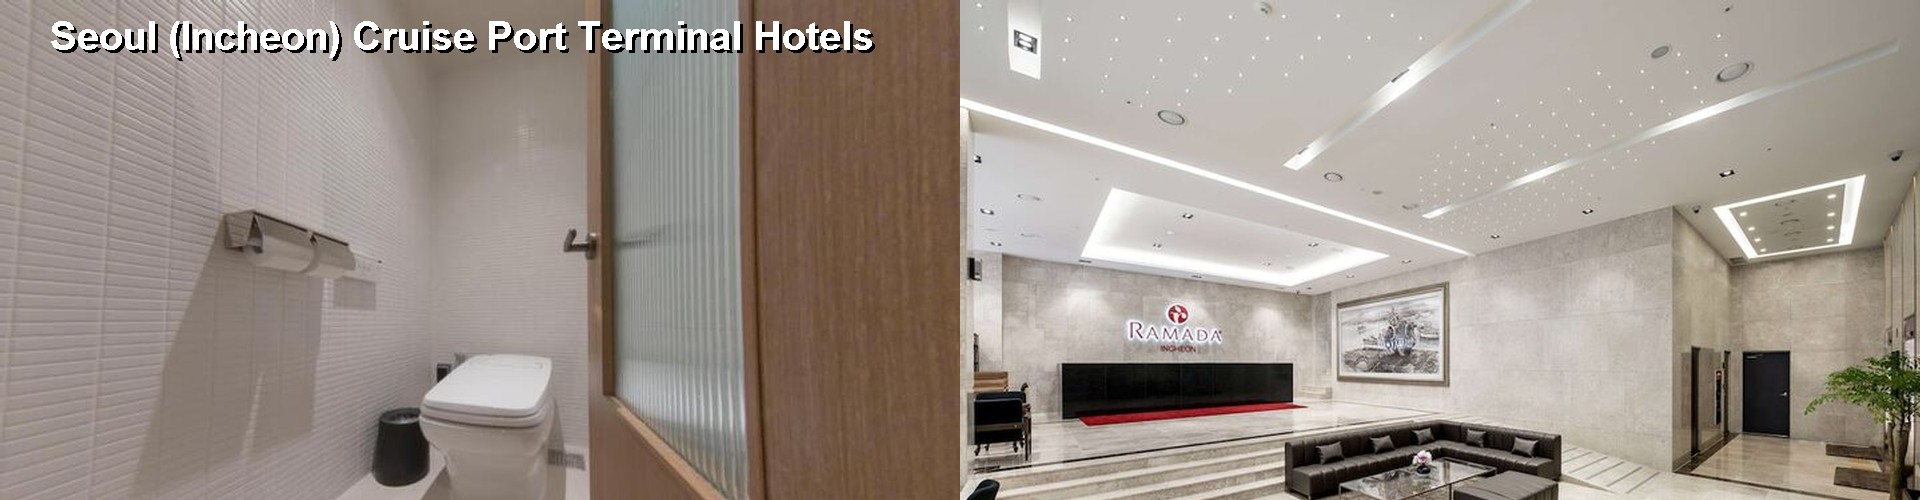 5 Best Hotels near Seoul (Incheon) Cruise Port Terminal